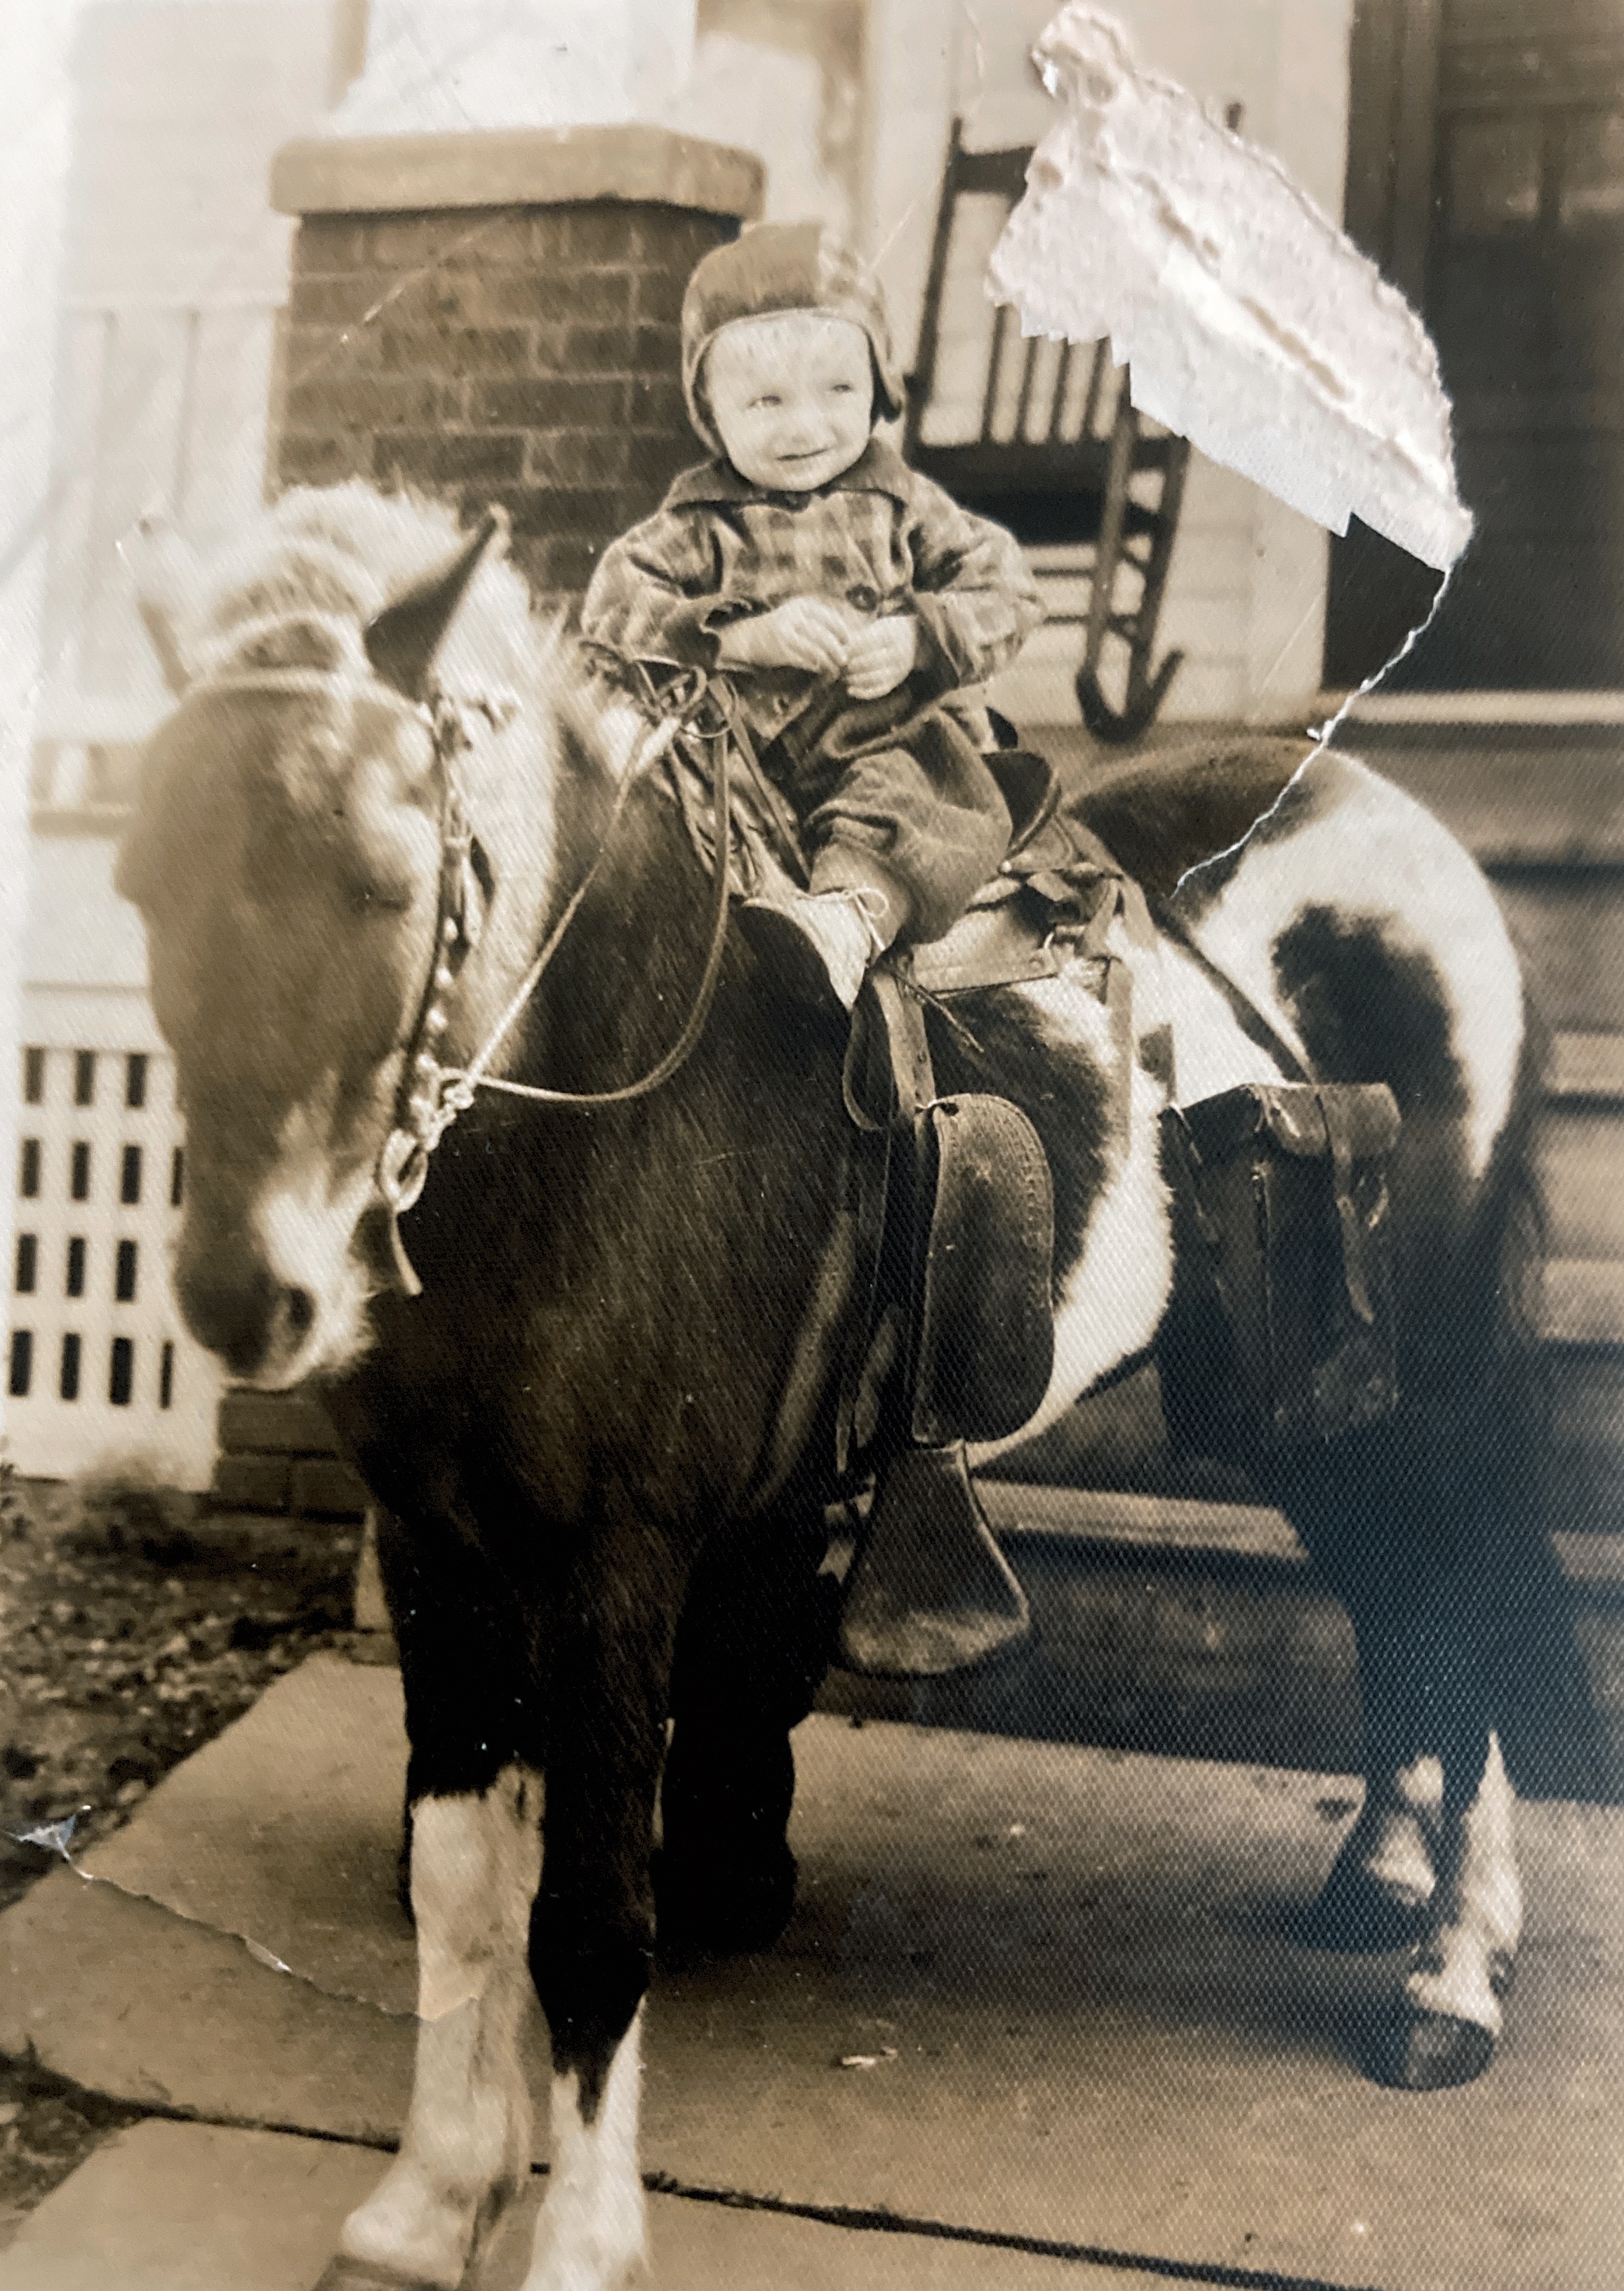 Bernard Cielec on a horse in front of his house. Circa 1940.